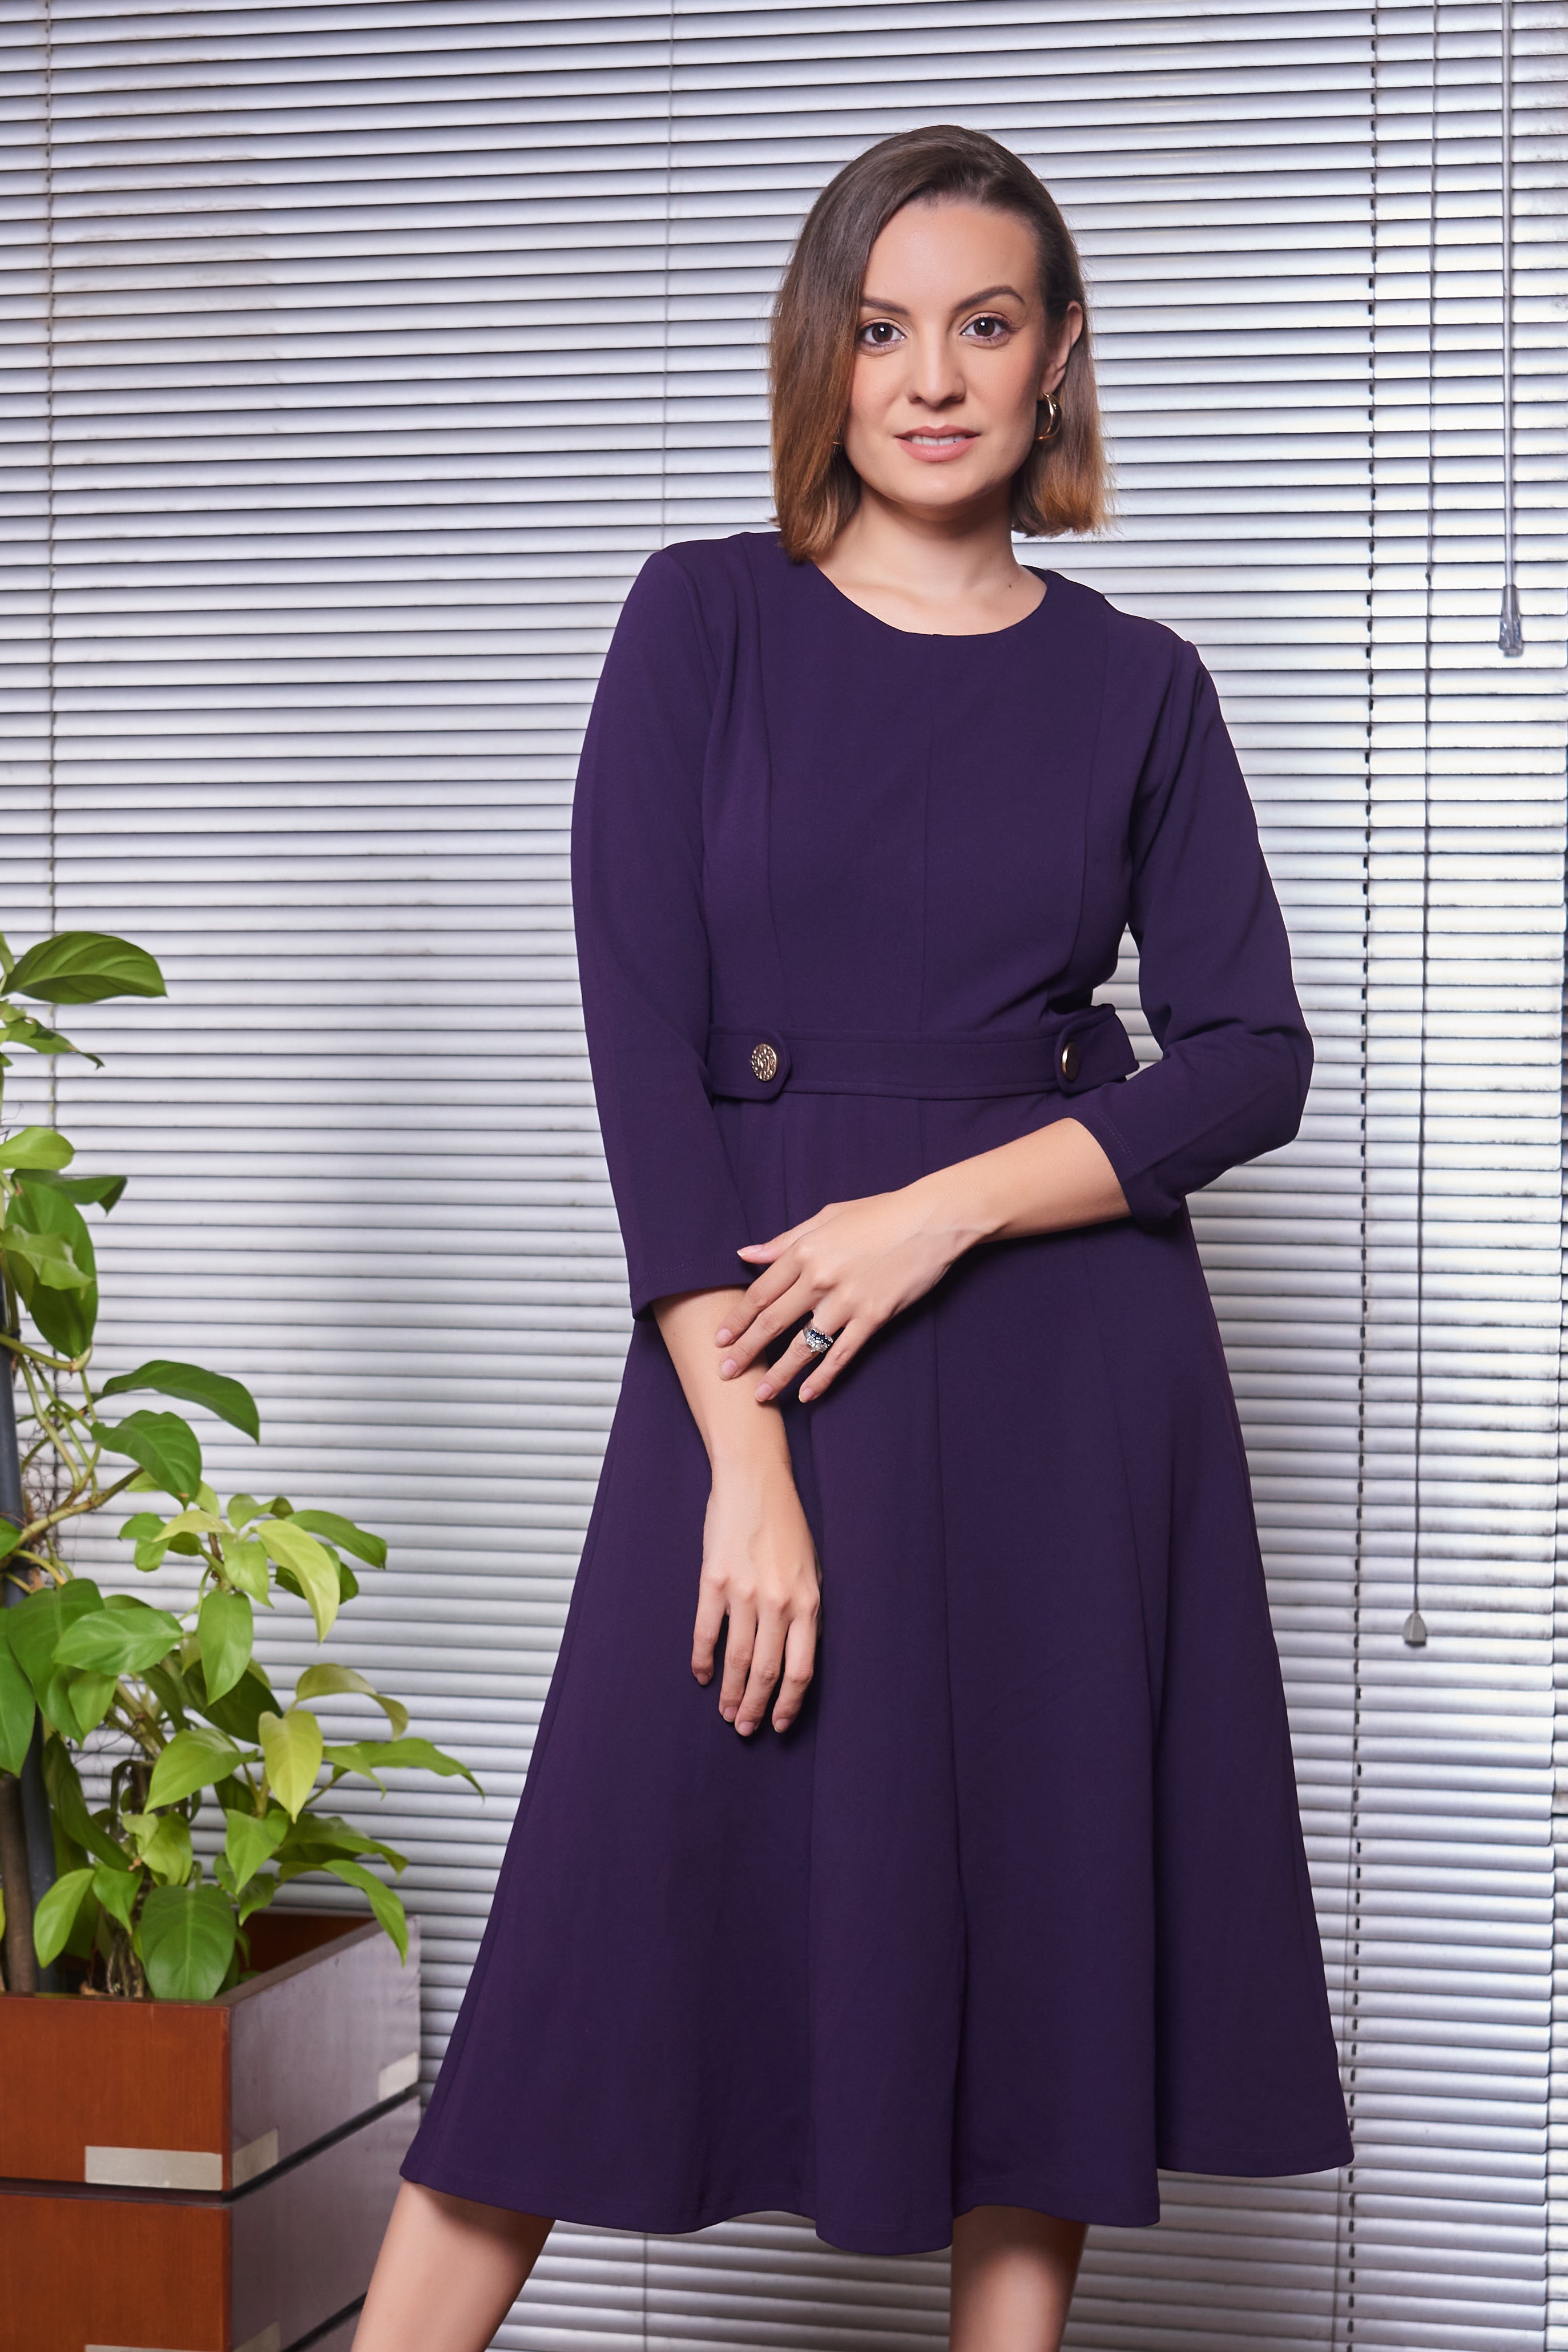 Violet buttoned dress - Avirate Sri Lanka